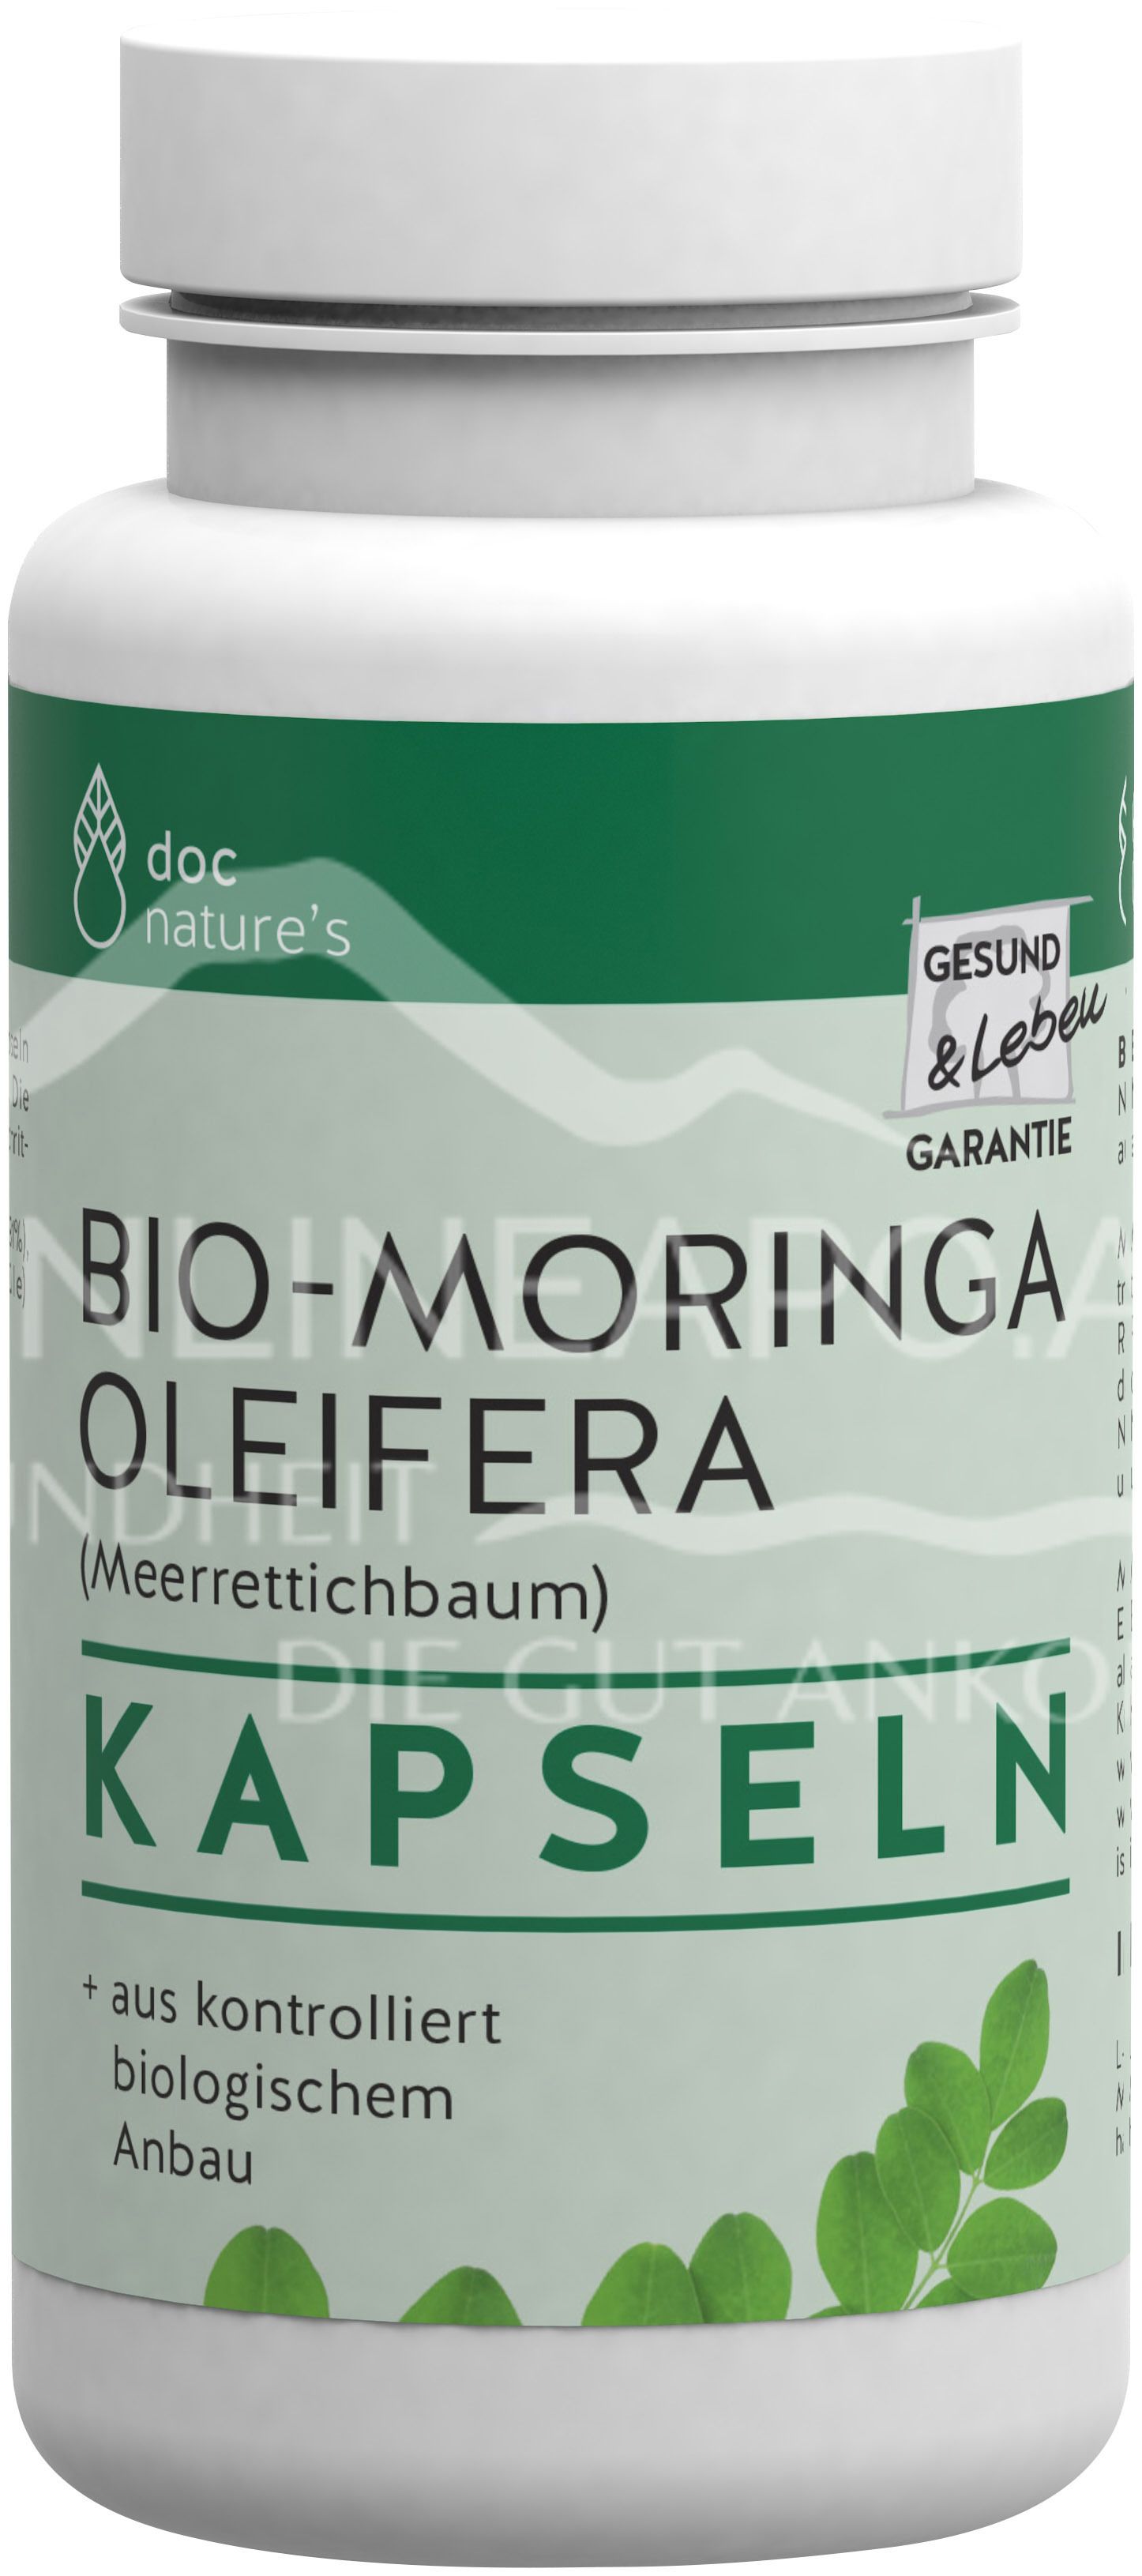 doc nature’s Bio MORINGA OLEIFERA Kapseln